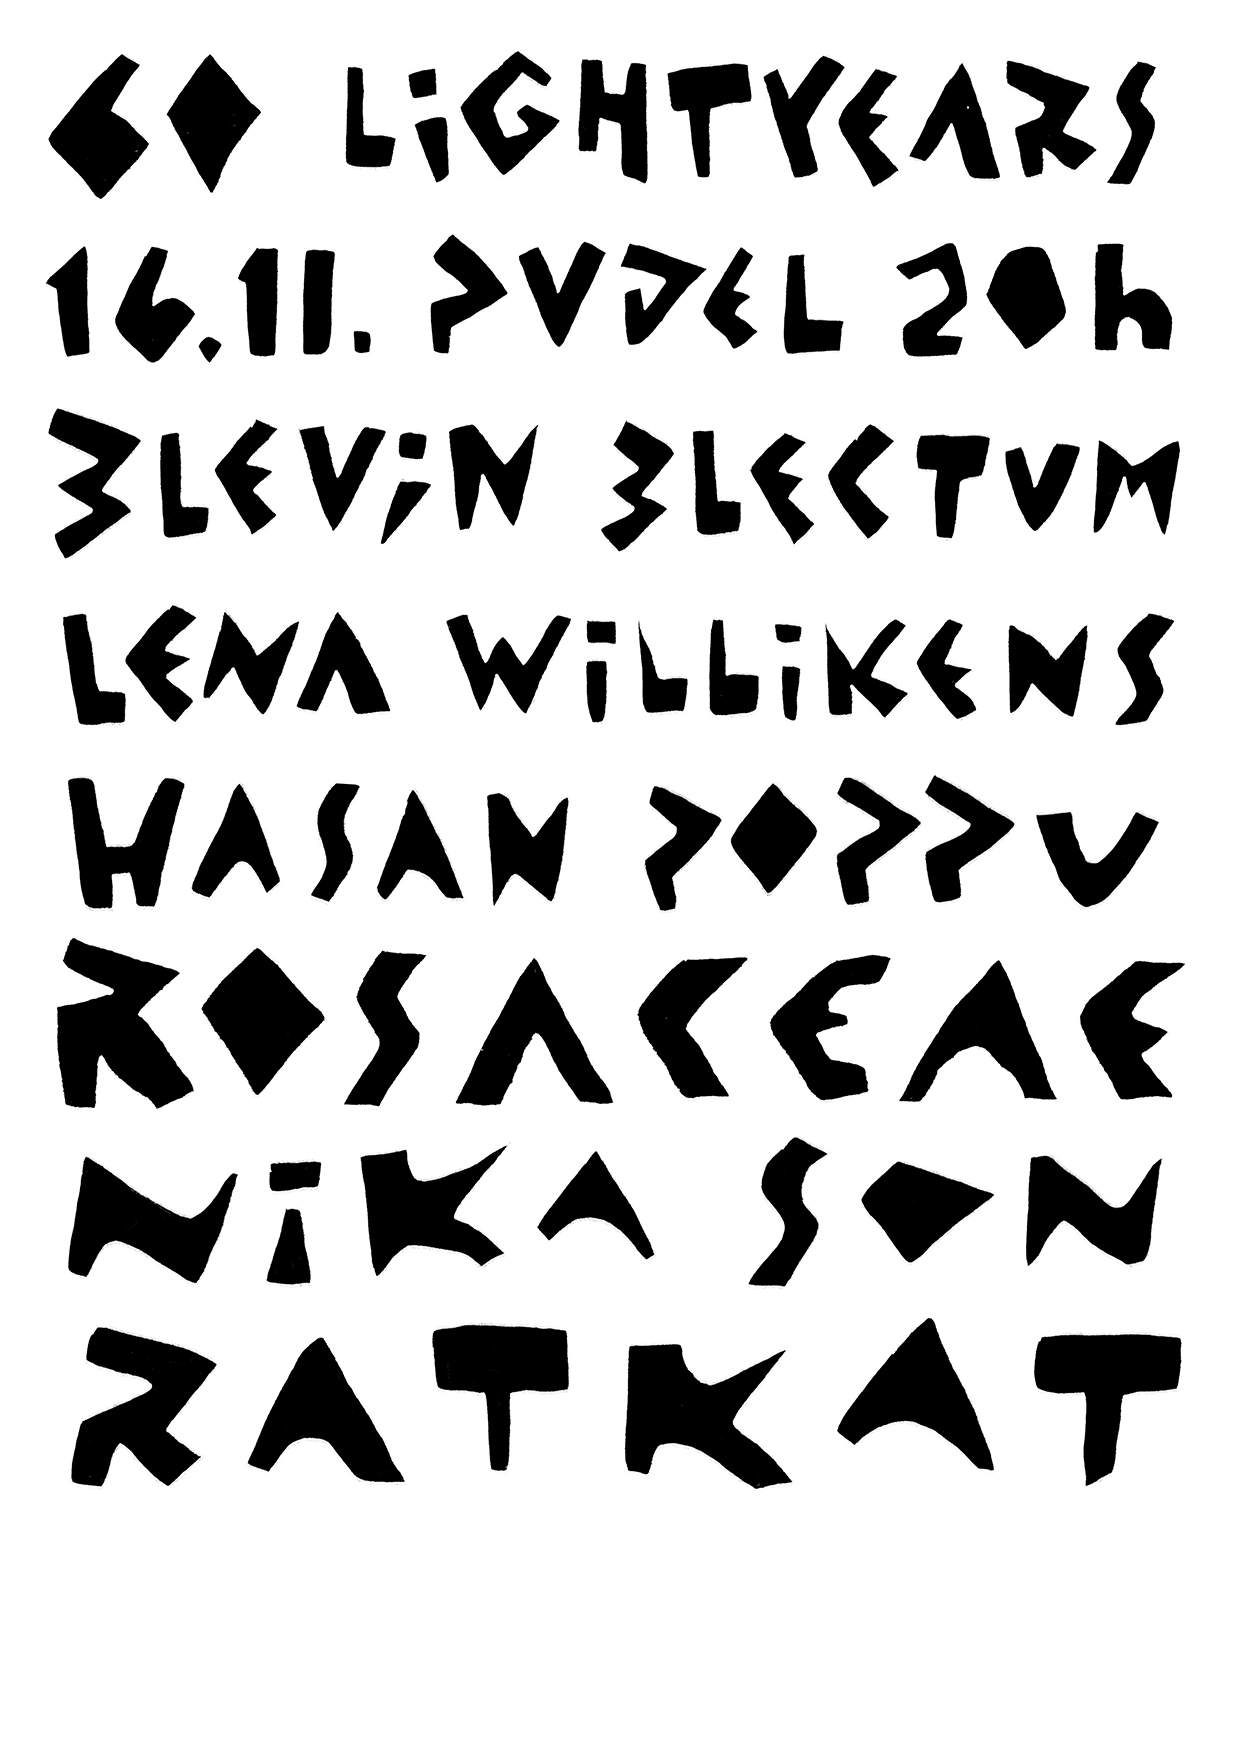 60 Lightyears with Lena Willikens, Blevin Blectum, Rosaceae, Hasan Poppu, Nika Son, Ratkat - フライヤー裏